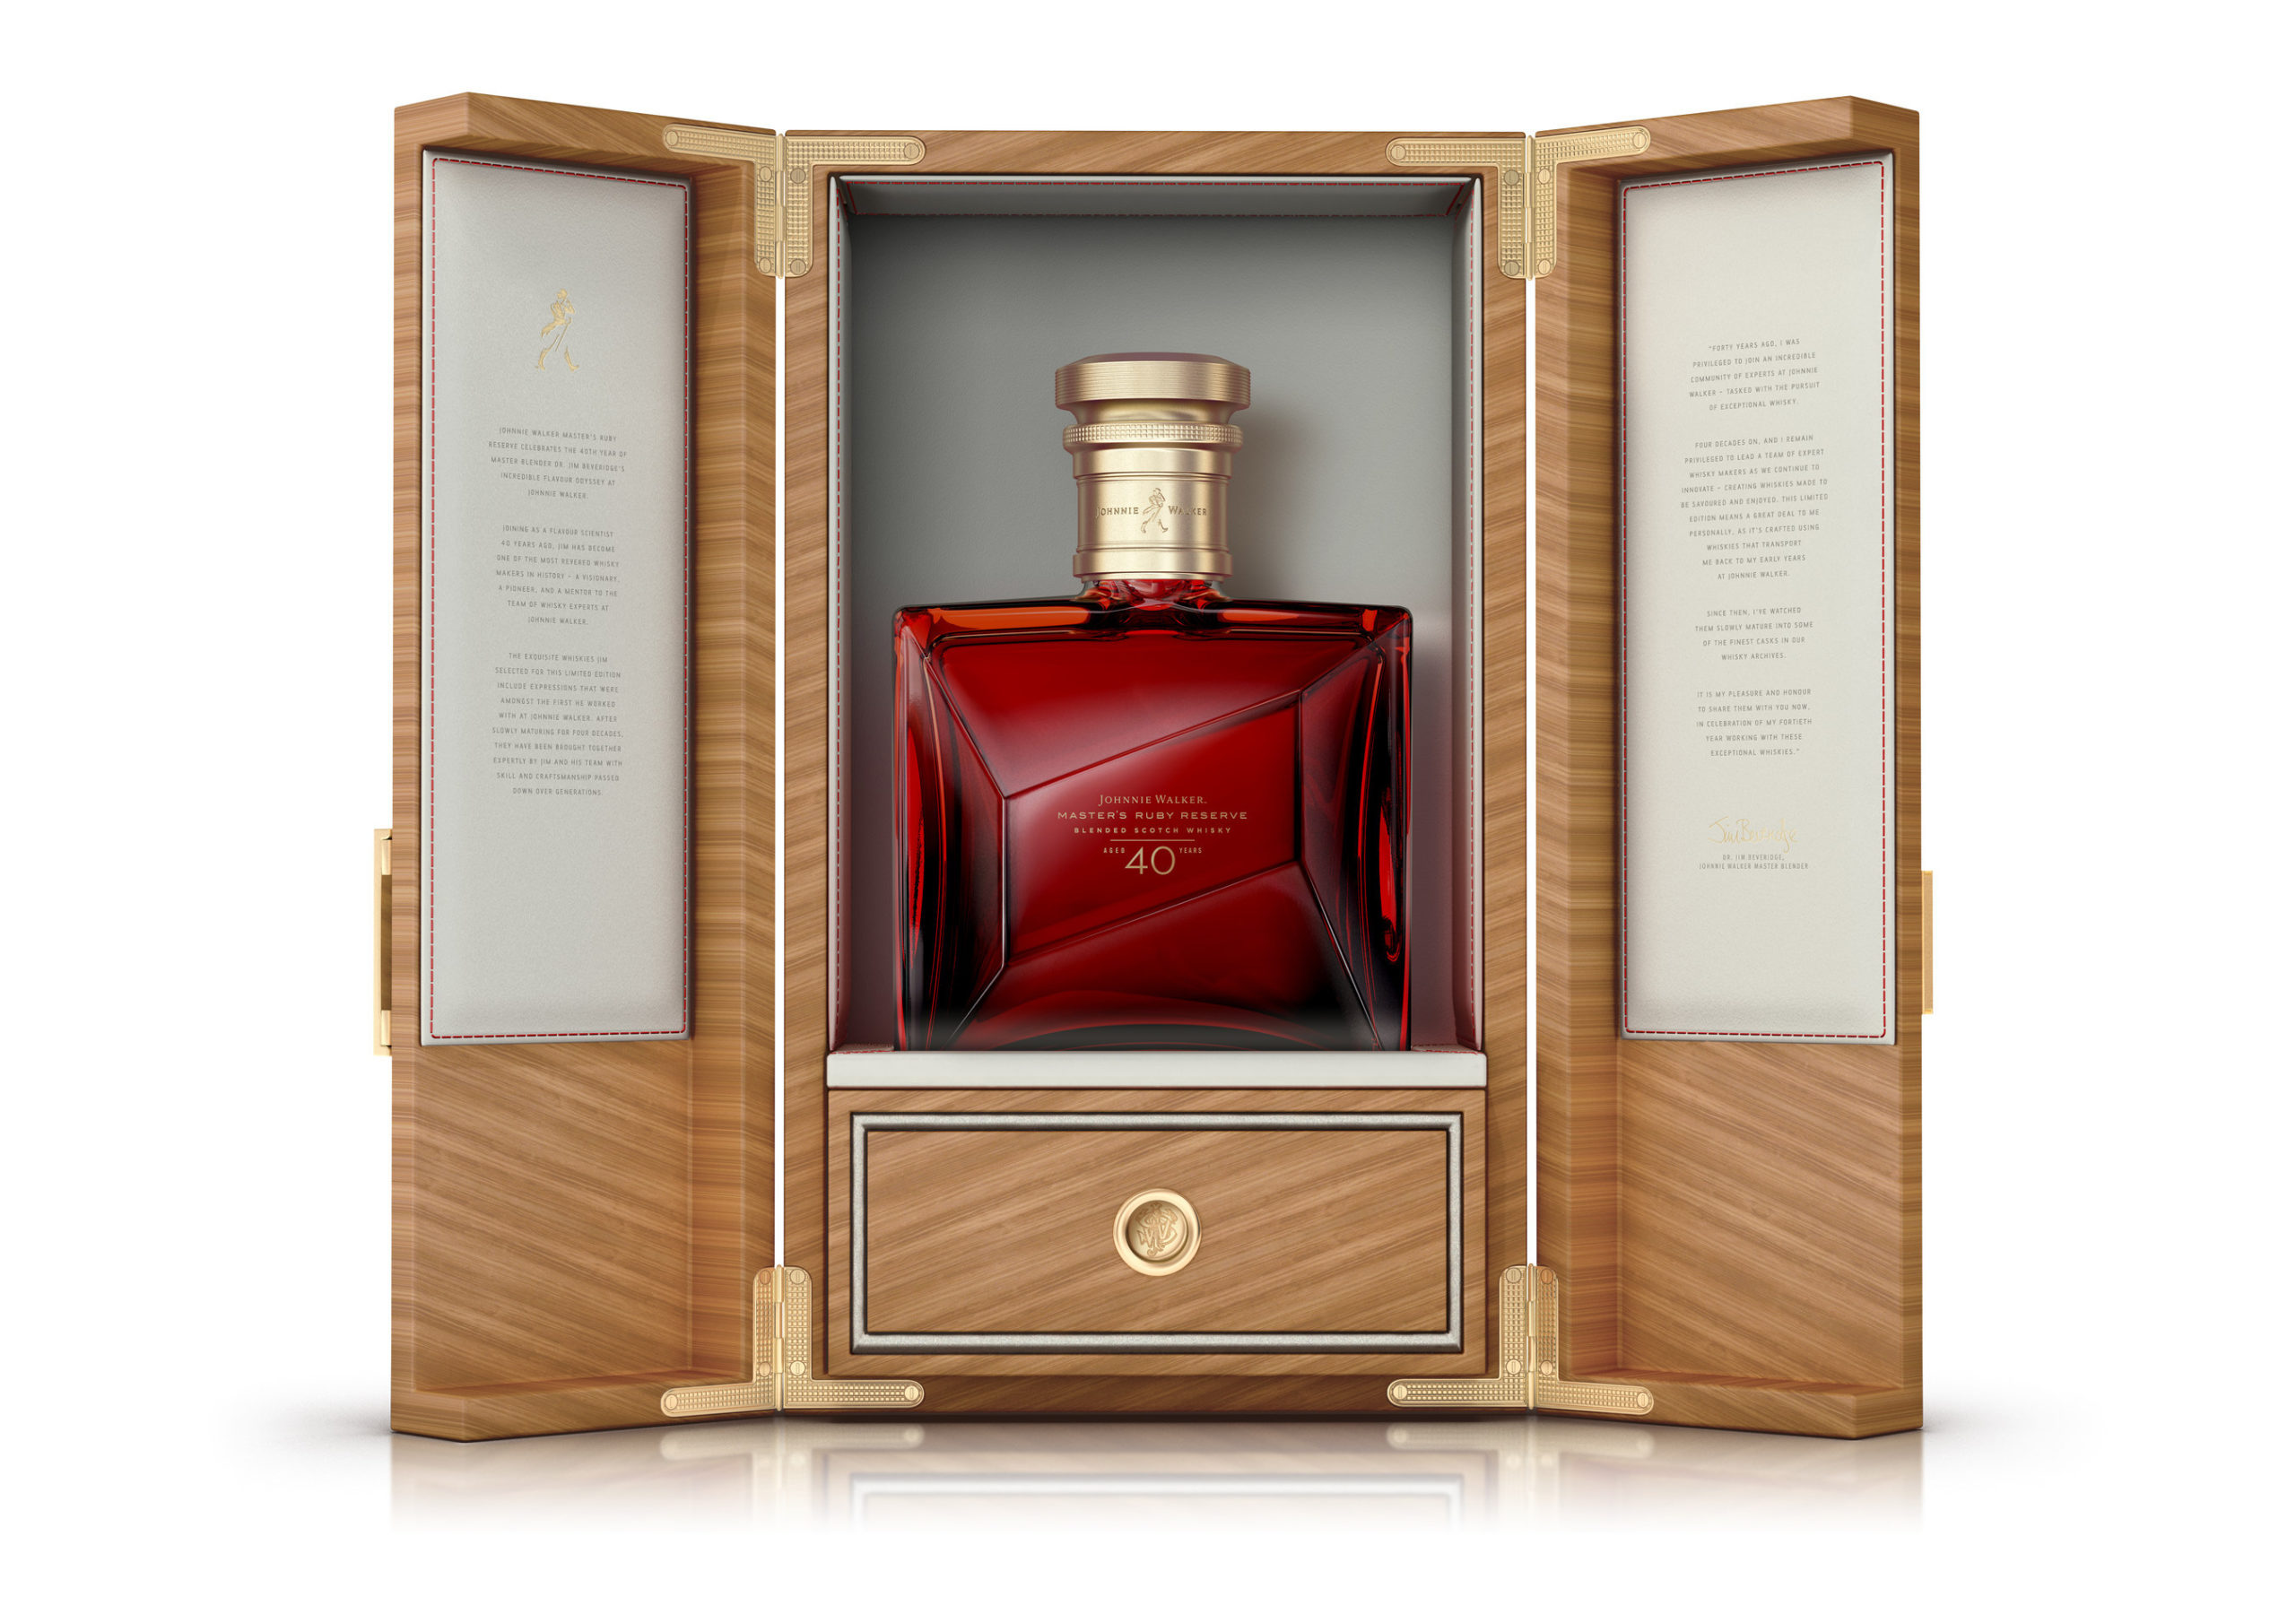 Graf Wanneer Niet essentieel Johnnie Walker Master's Ruby Reserve 40 Year Old Whisky - Notable  Distinction